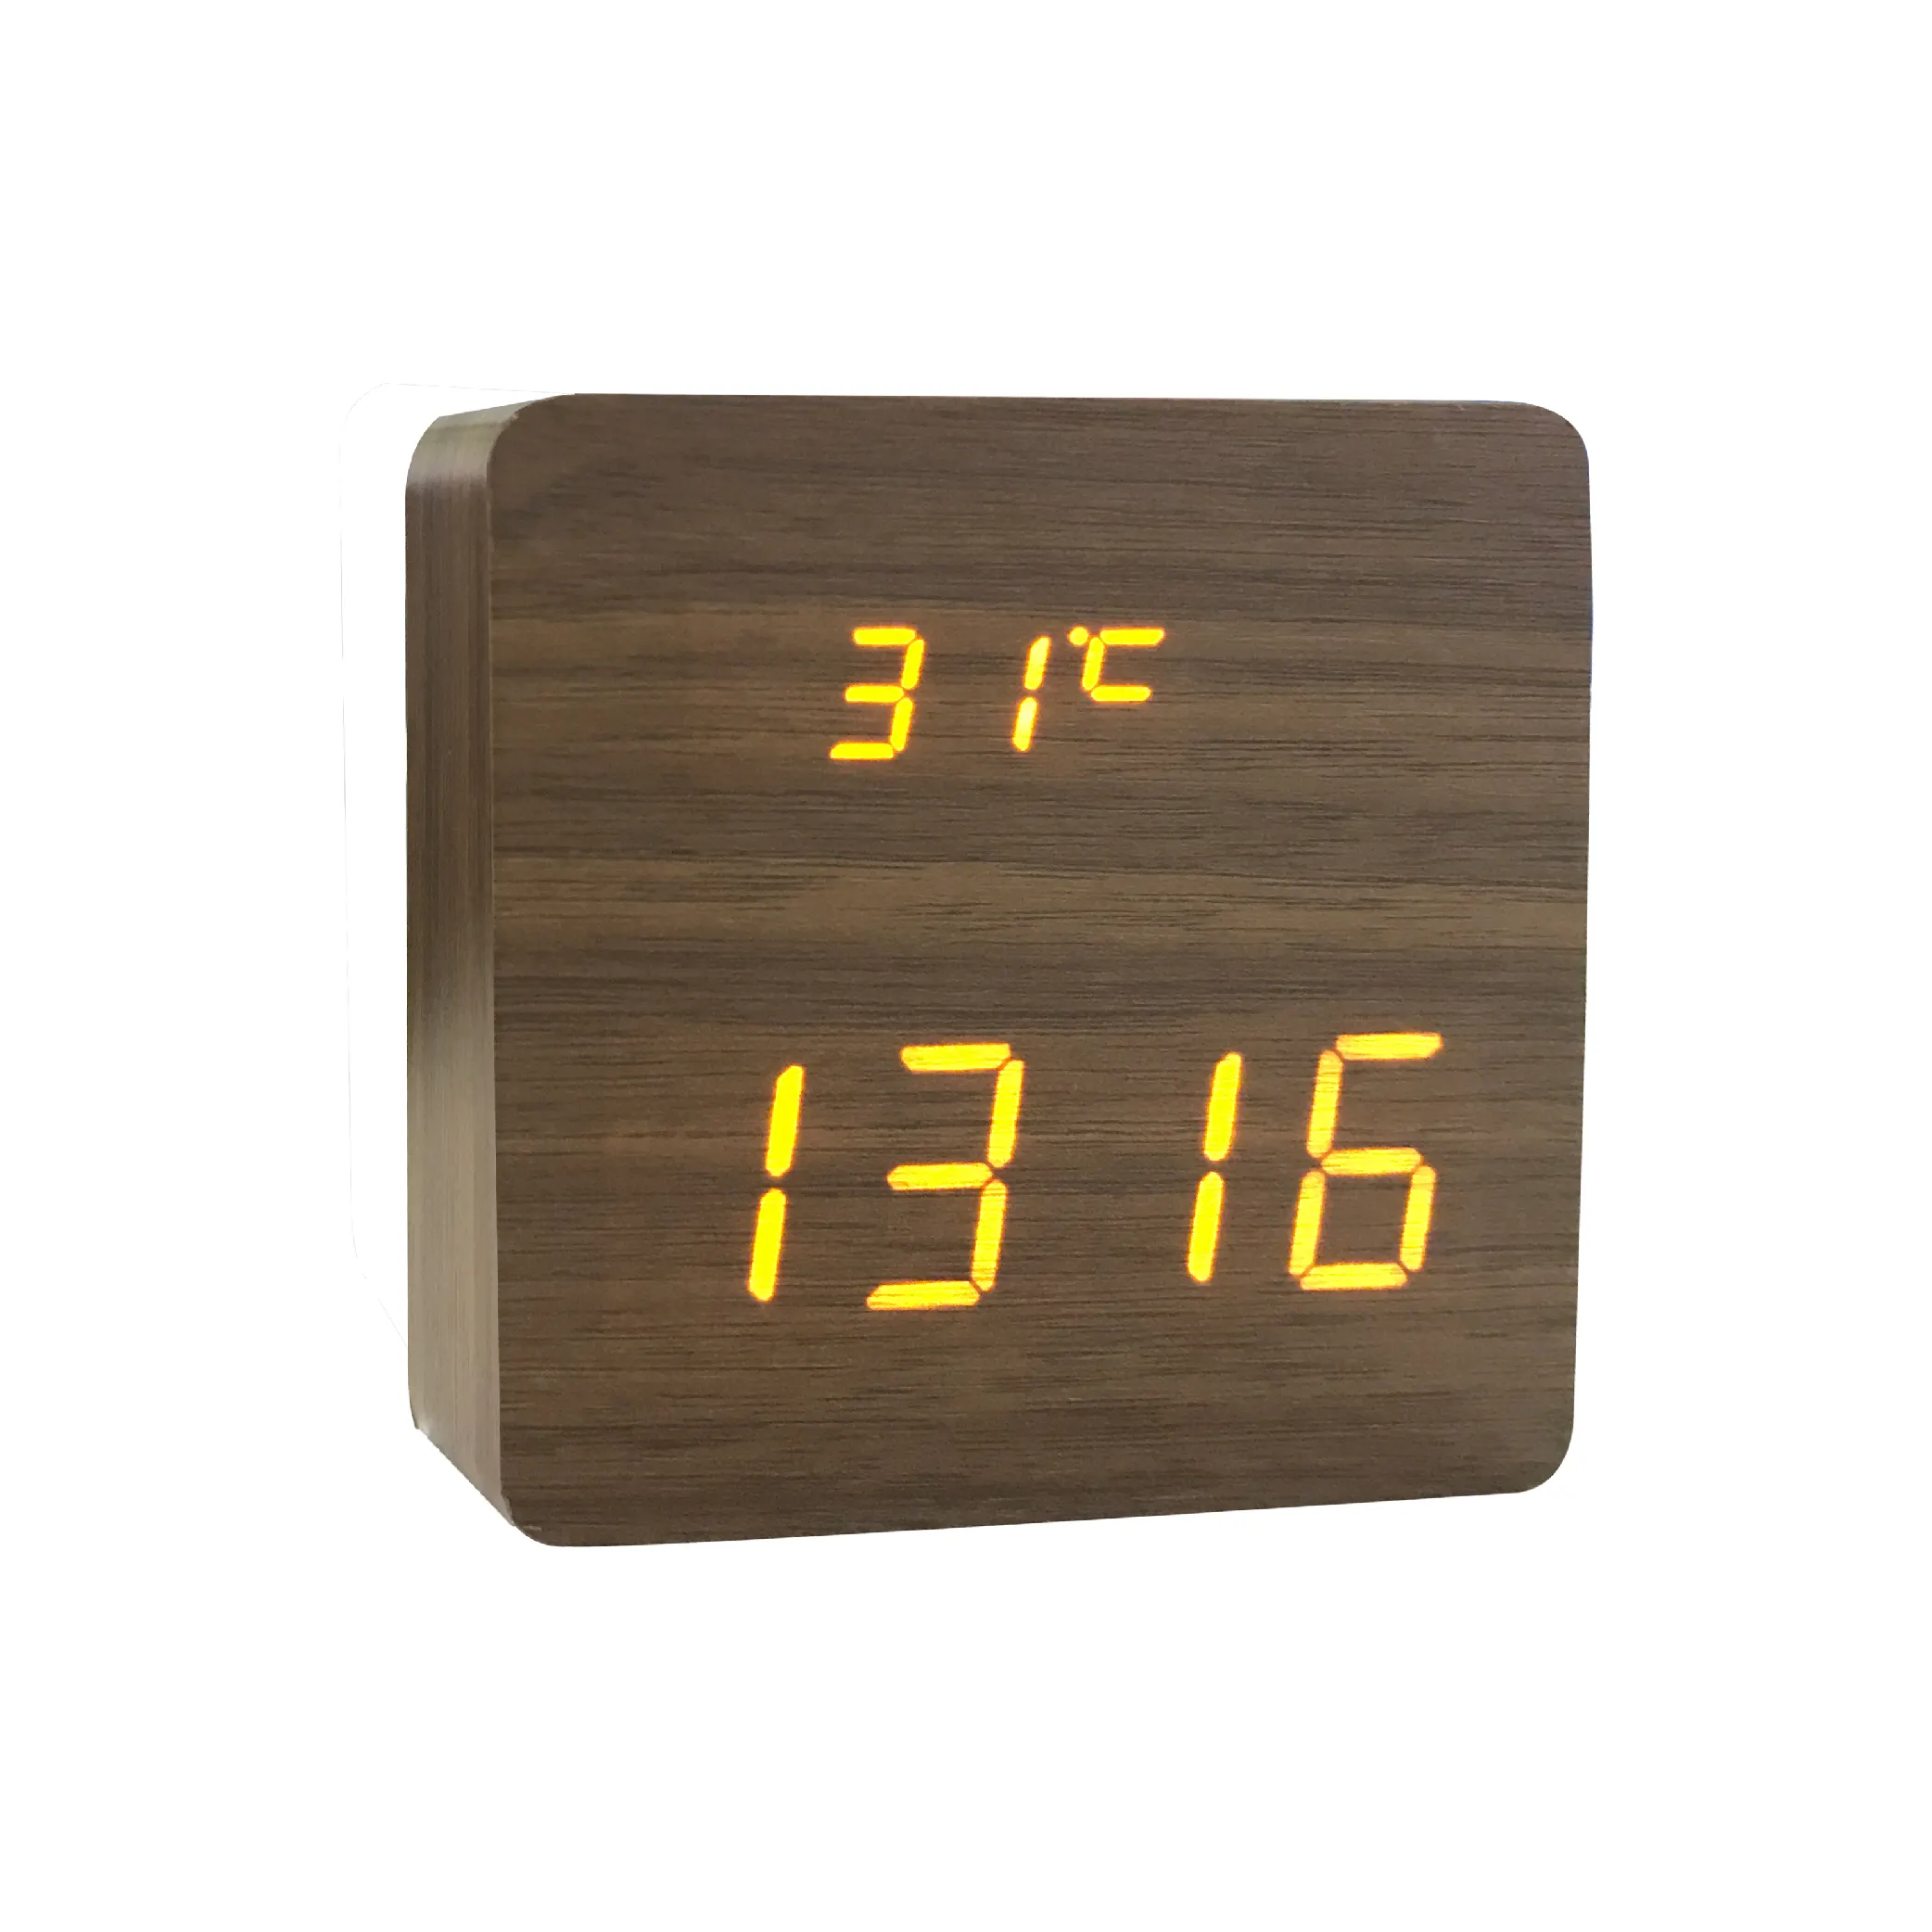 EWETIME Multi-functional wooden table digital clock with 3 alarm, calendar